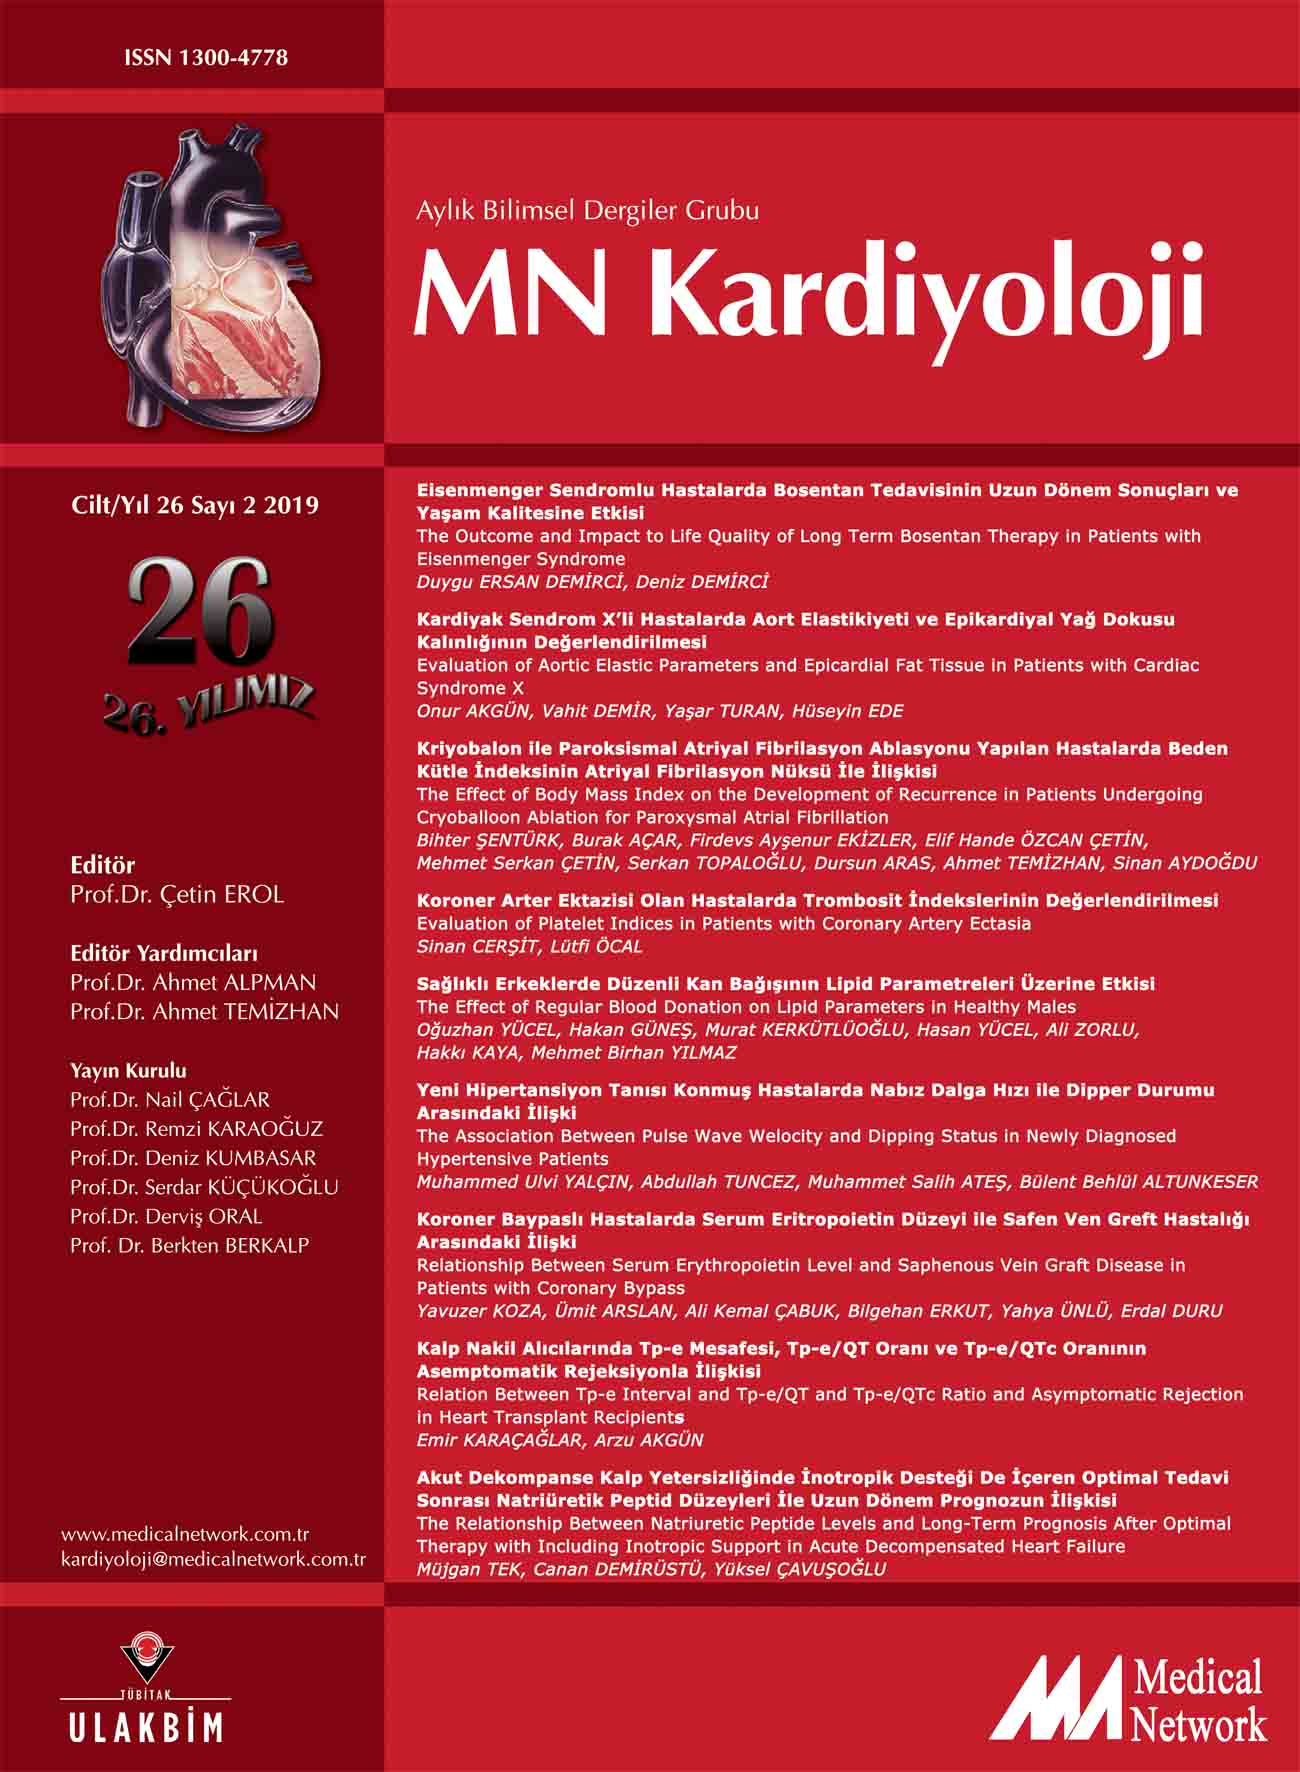 <p>MN Kardiyoloji Cilt: 26 Sayı: 2 2019 MN Cardiology Volume: 26 No: 2 2019</p>